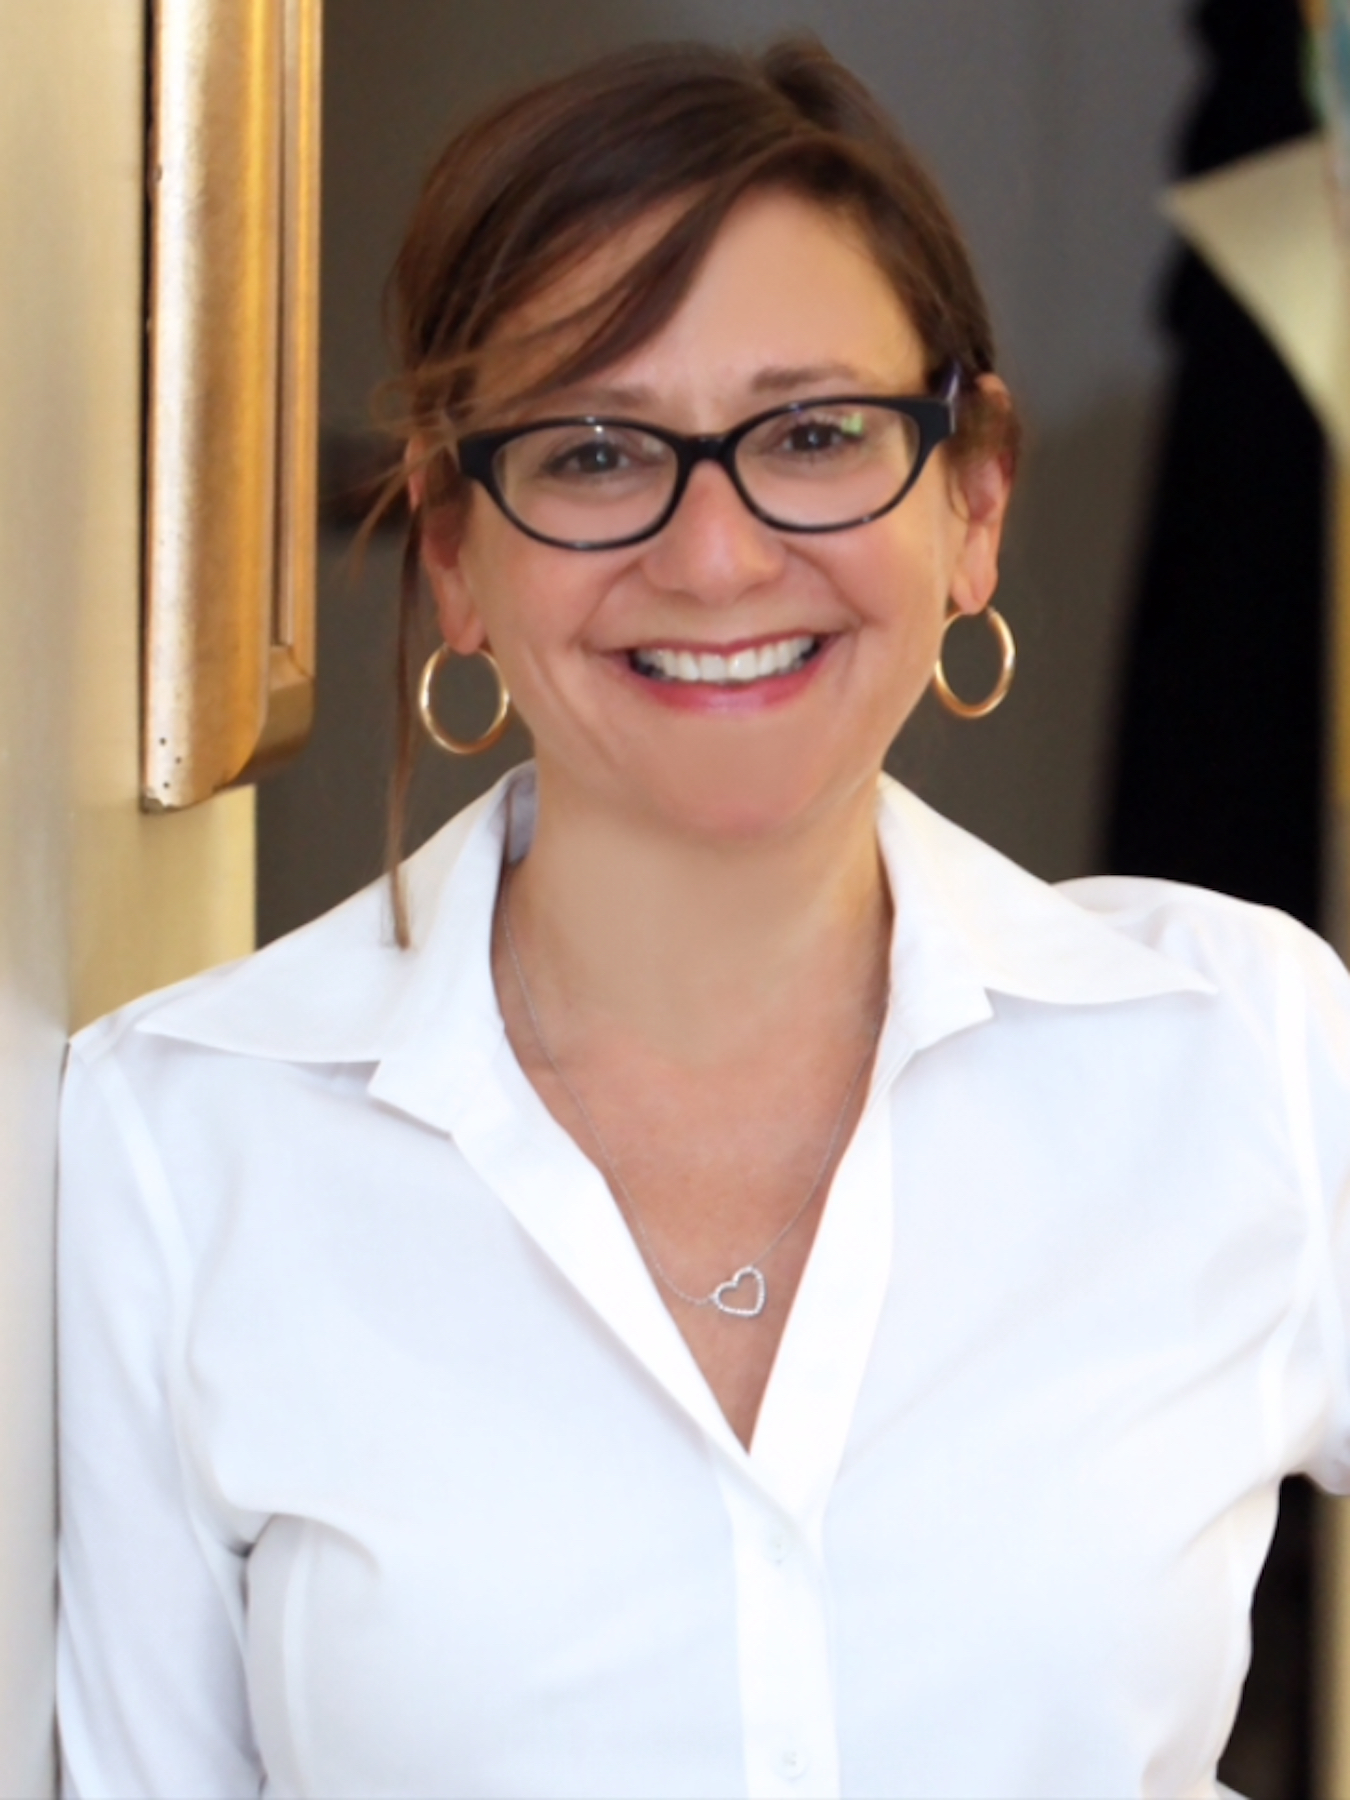 Barbara E. Katz, Director, Business Development at Alliance Homecare